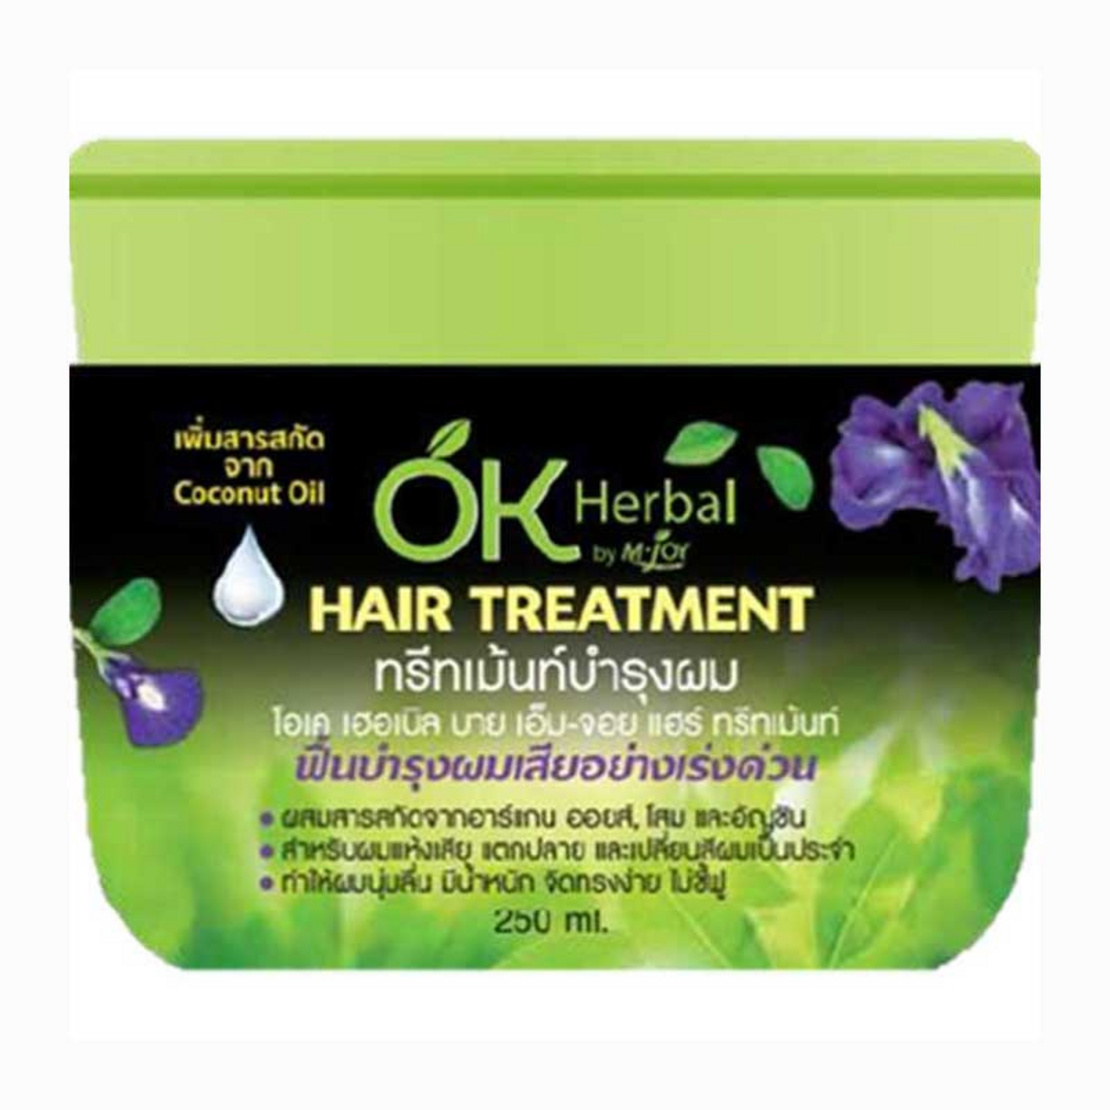 OK Herbal Hair Treatment 250ml.